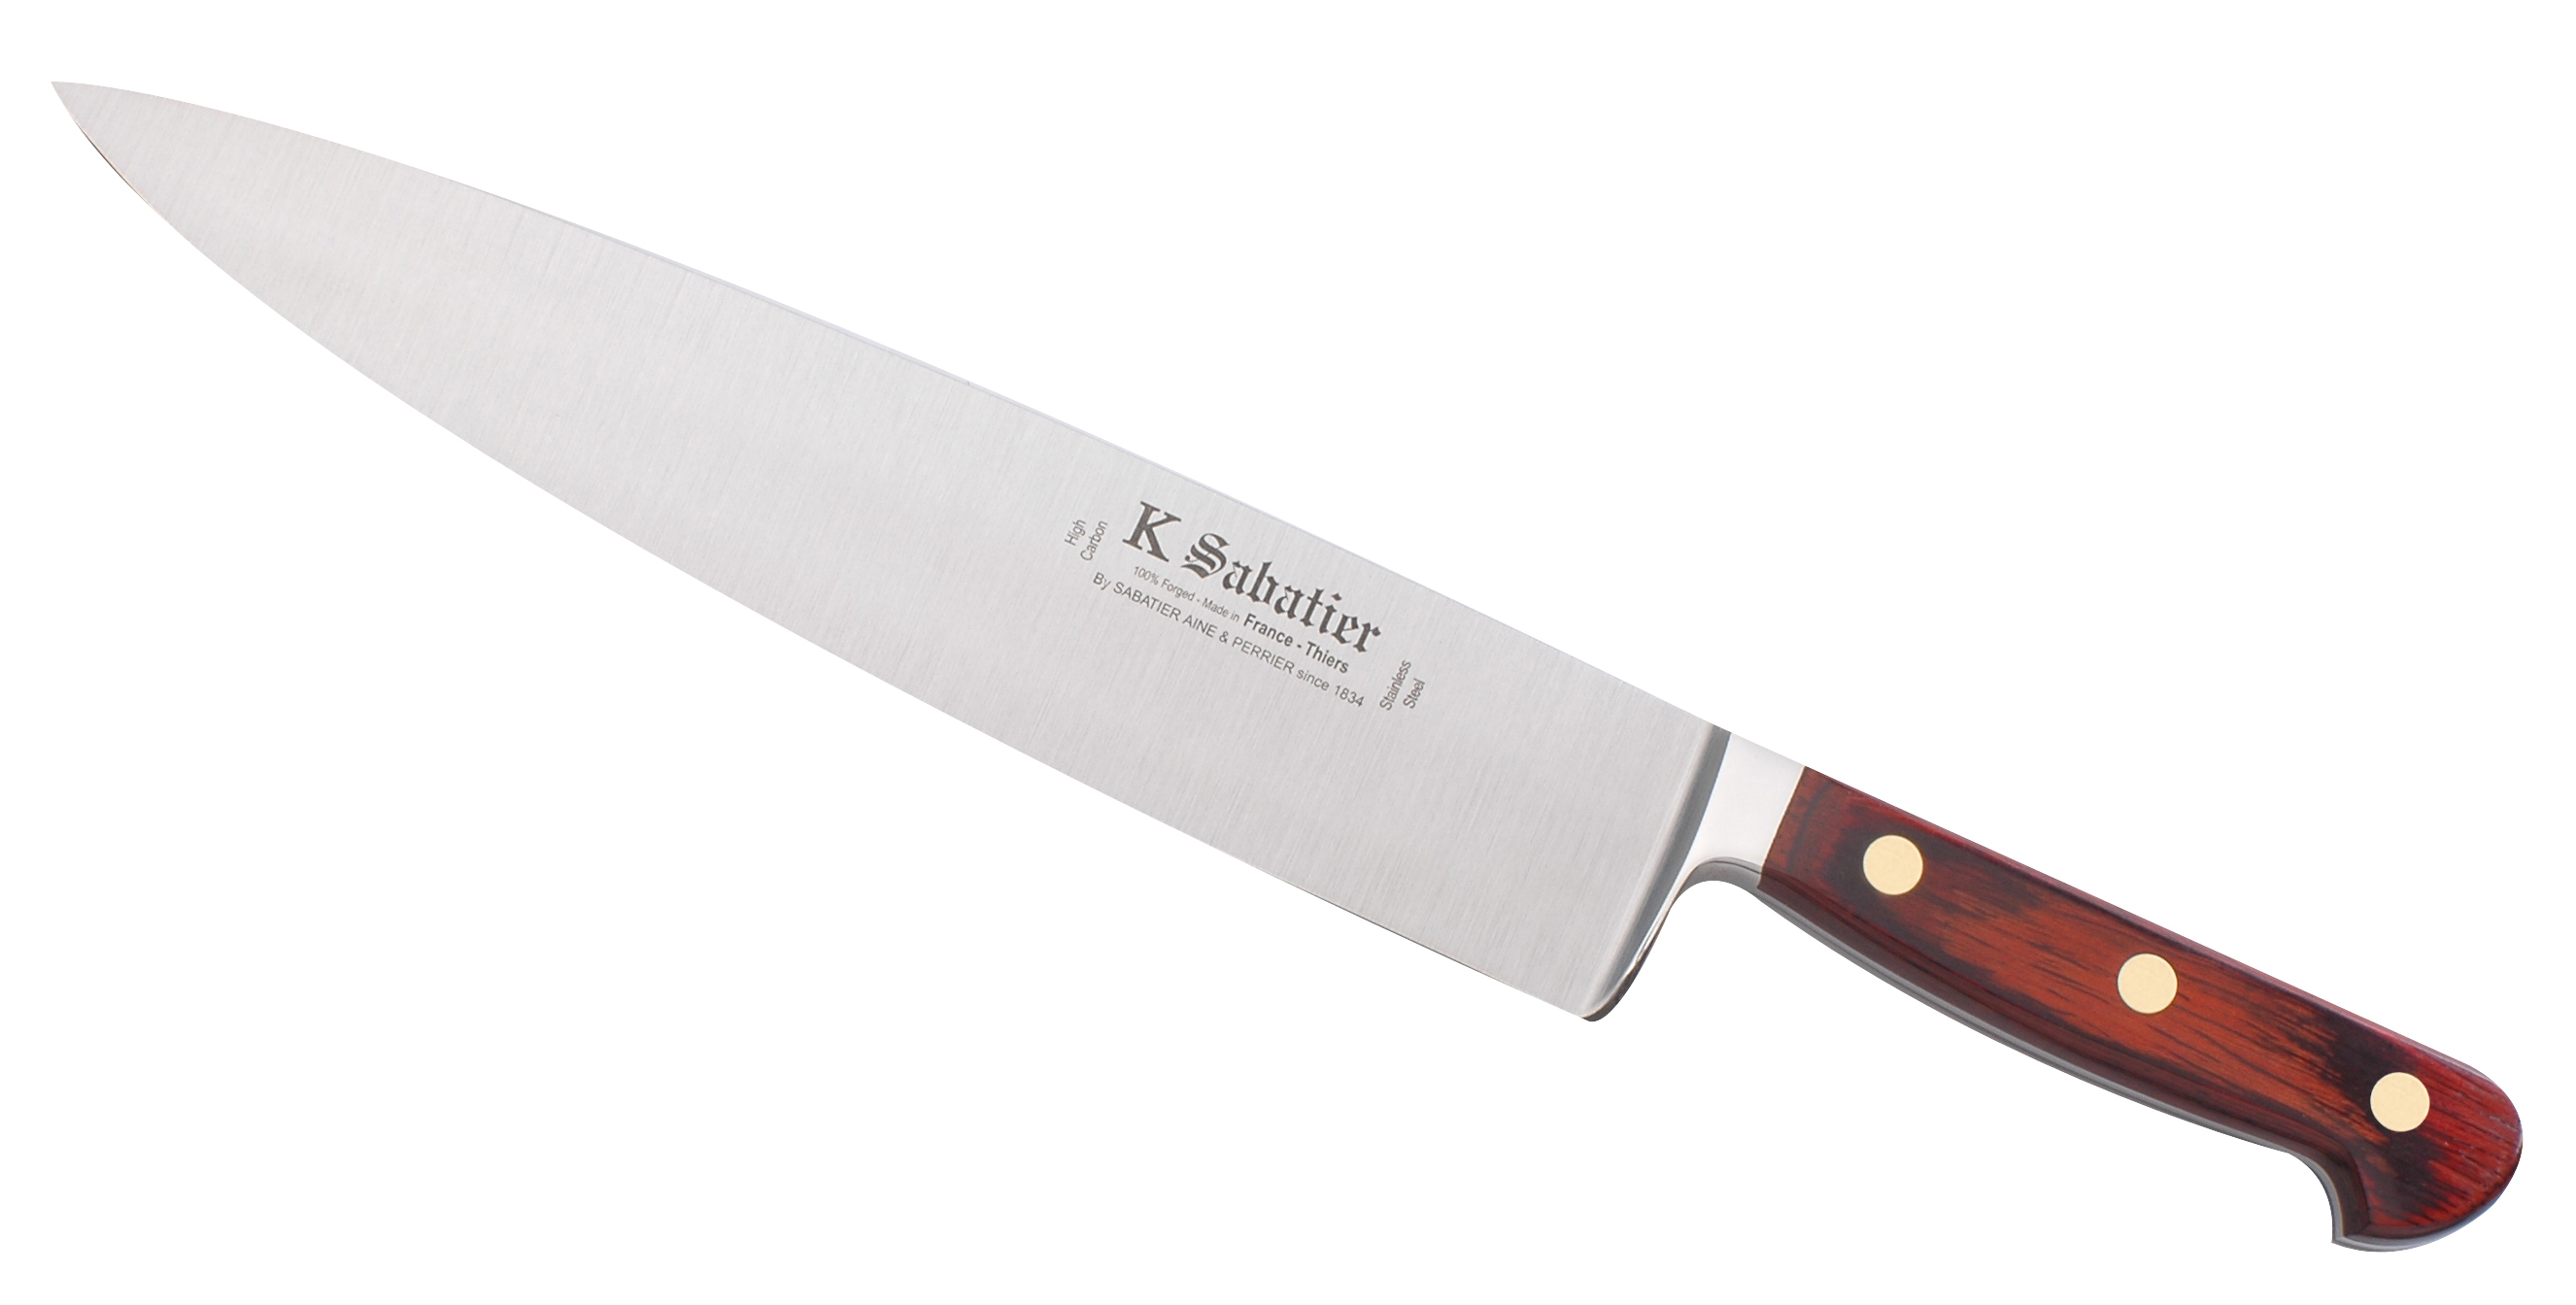 - : Knife in Auvergne K kitchen Sabatier professional 10 Cooking knife series